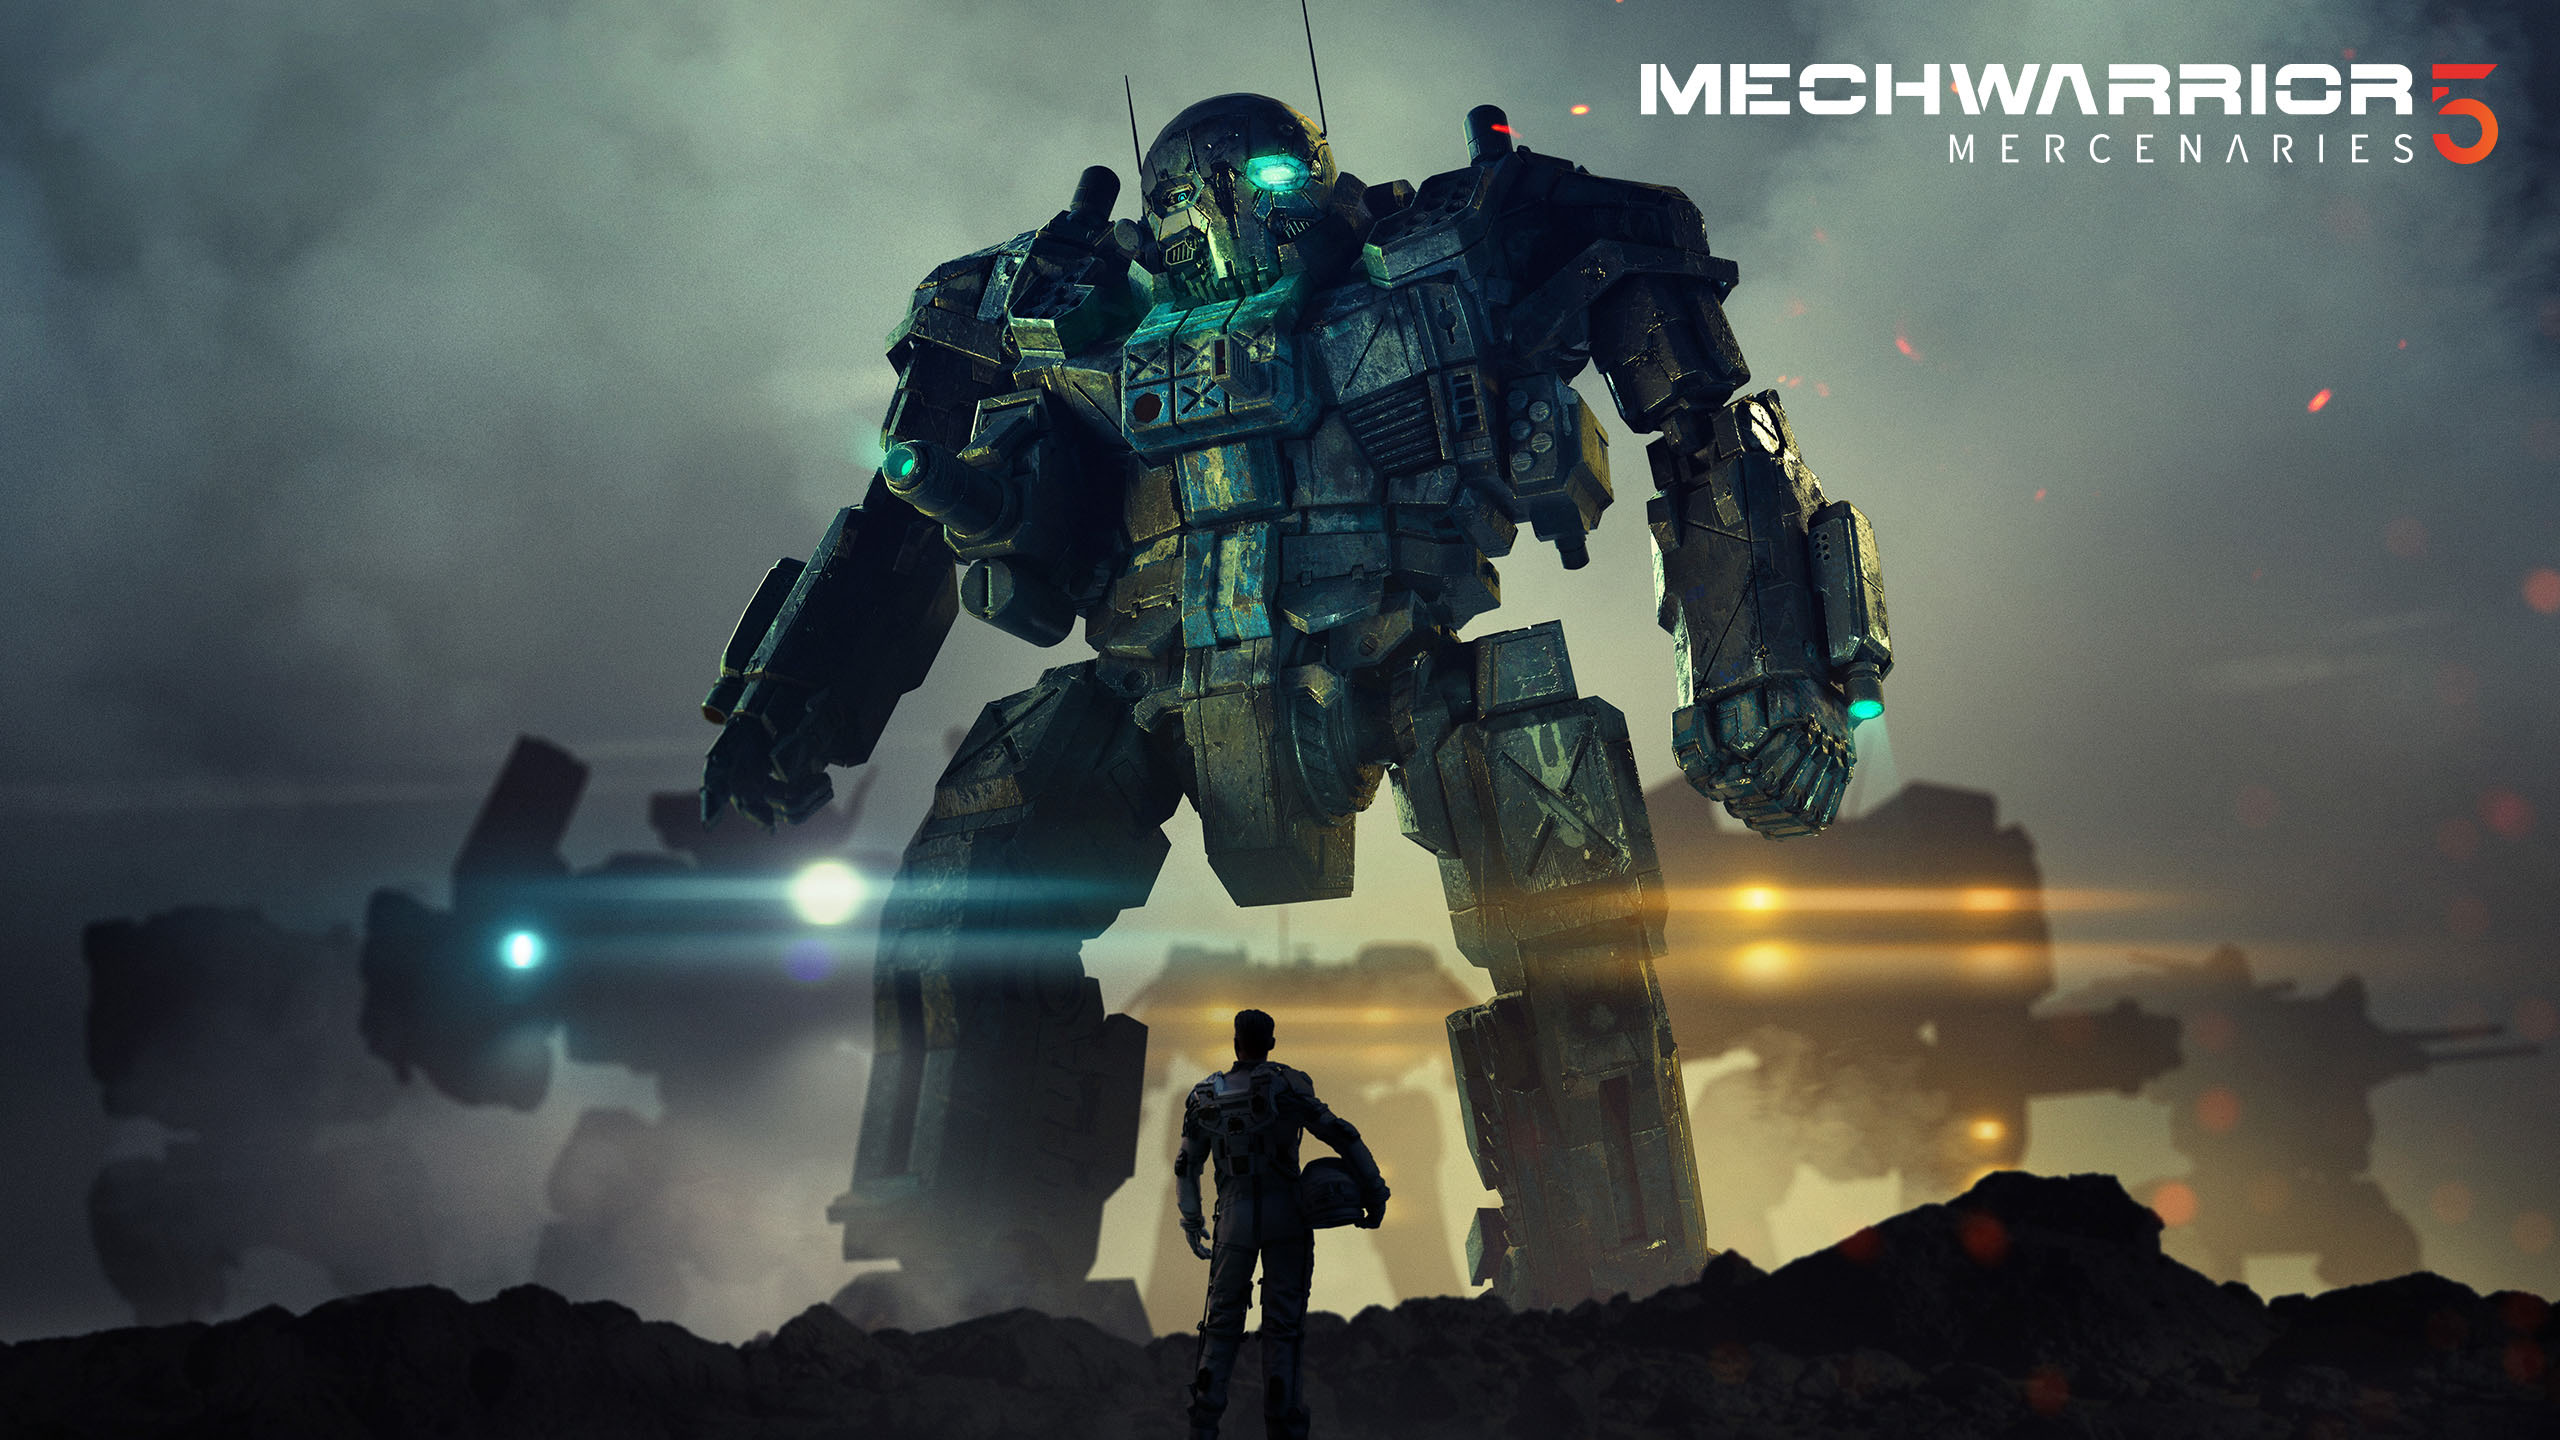 Video Game MechWarrior 5 Mercenaries 2560x1440